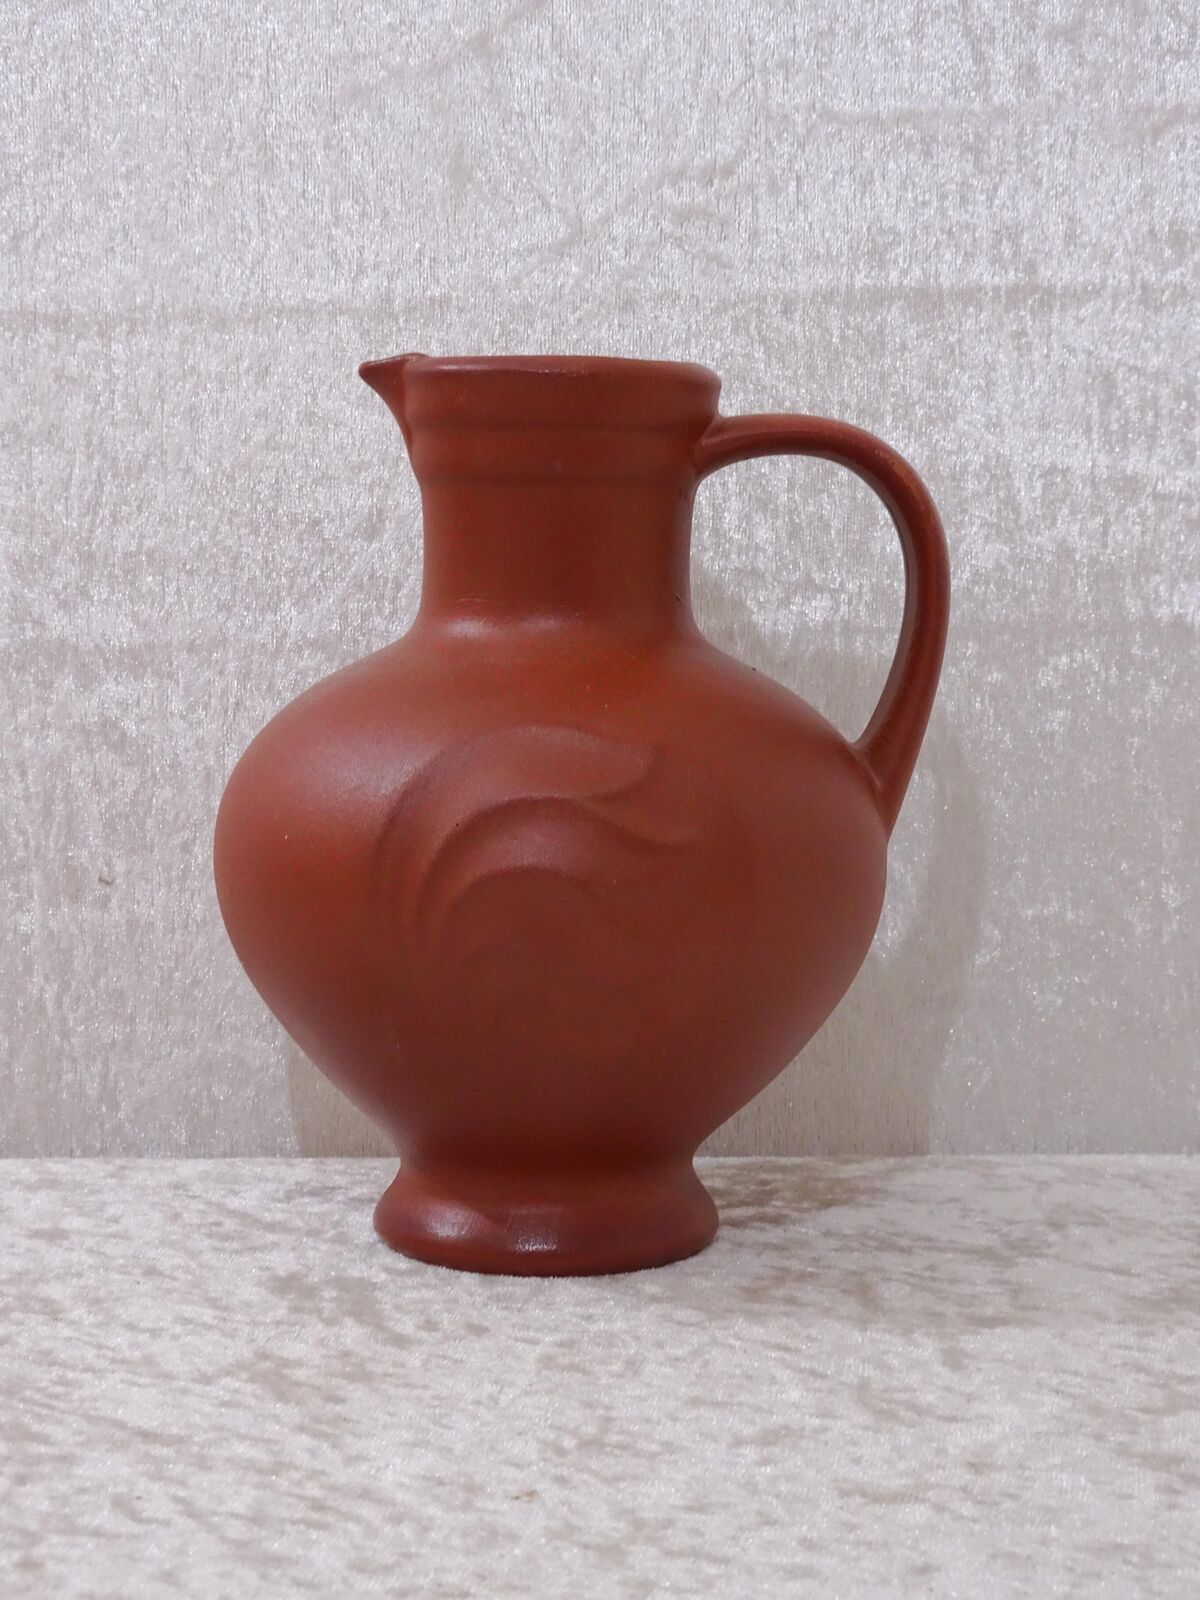 GDR Design Ceramic Jar Vintage around 1970 - Handmade - Country House Style -